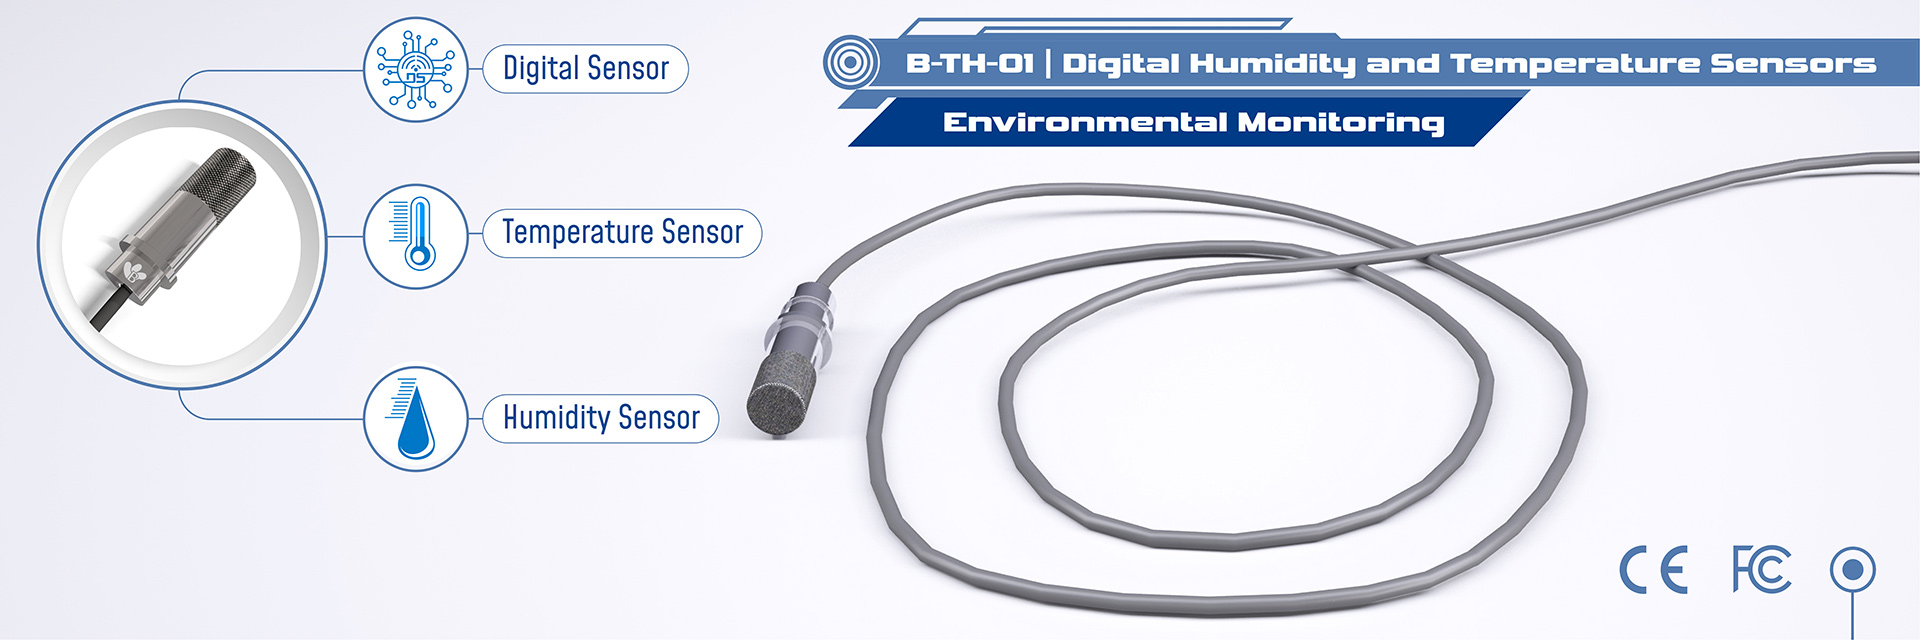 https://www.beanair.com/images/slideshow-B-TH-01-Digital-Humidity-and-Temperature-Sensors.jpg